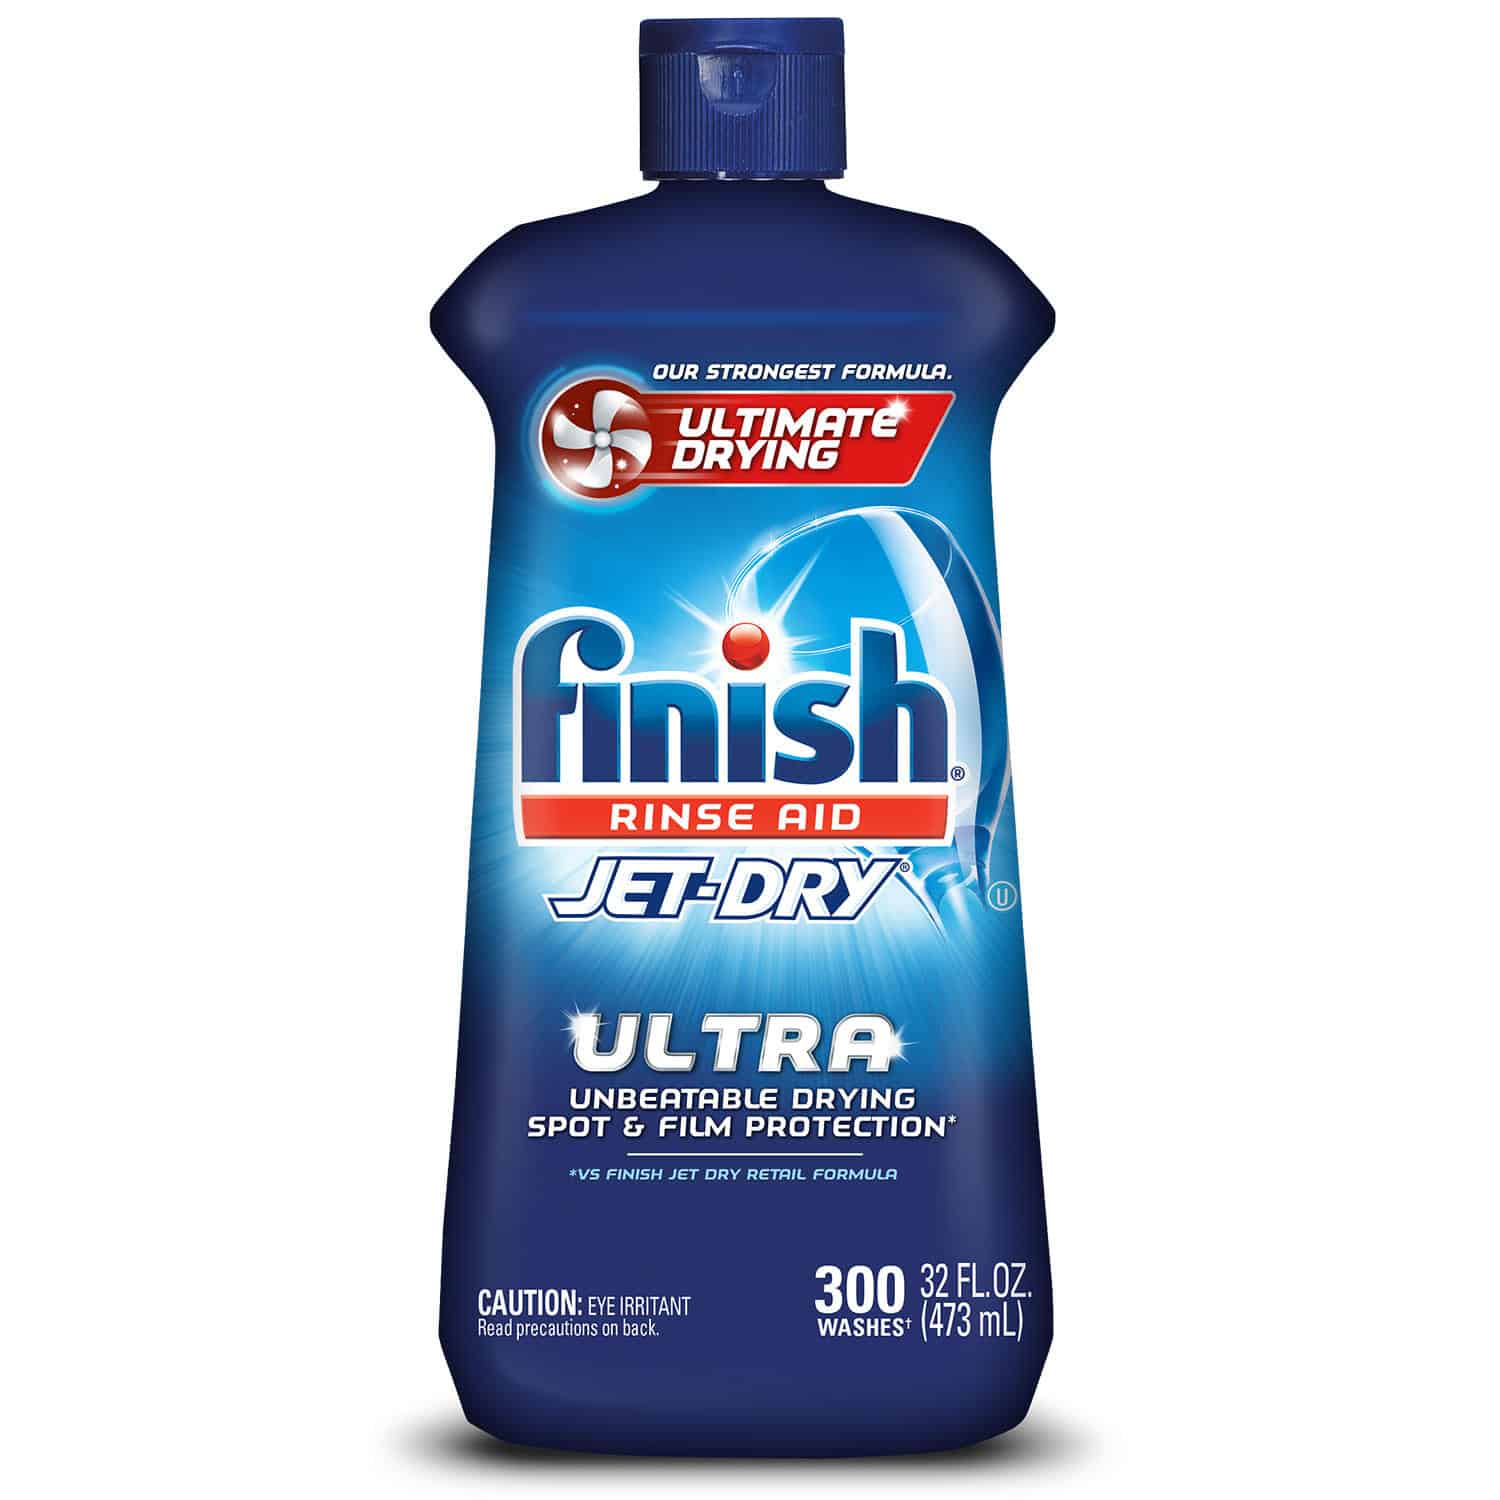 Finish Jet-Dry Ultra Rinse Aid Dishwasher Rinse Agent & Drying Agent (32 oz.)